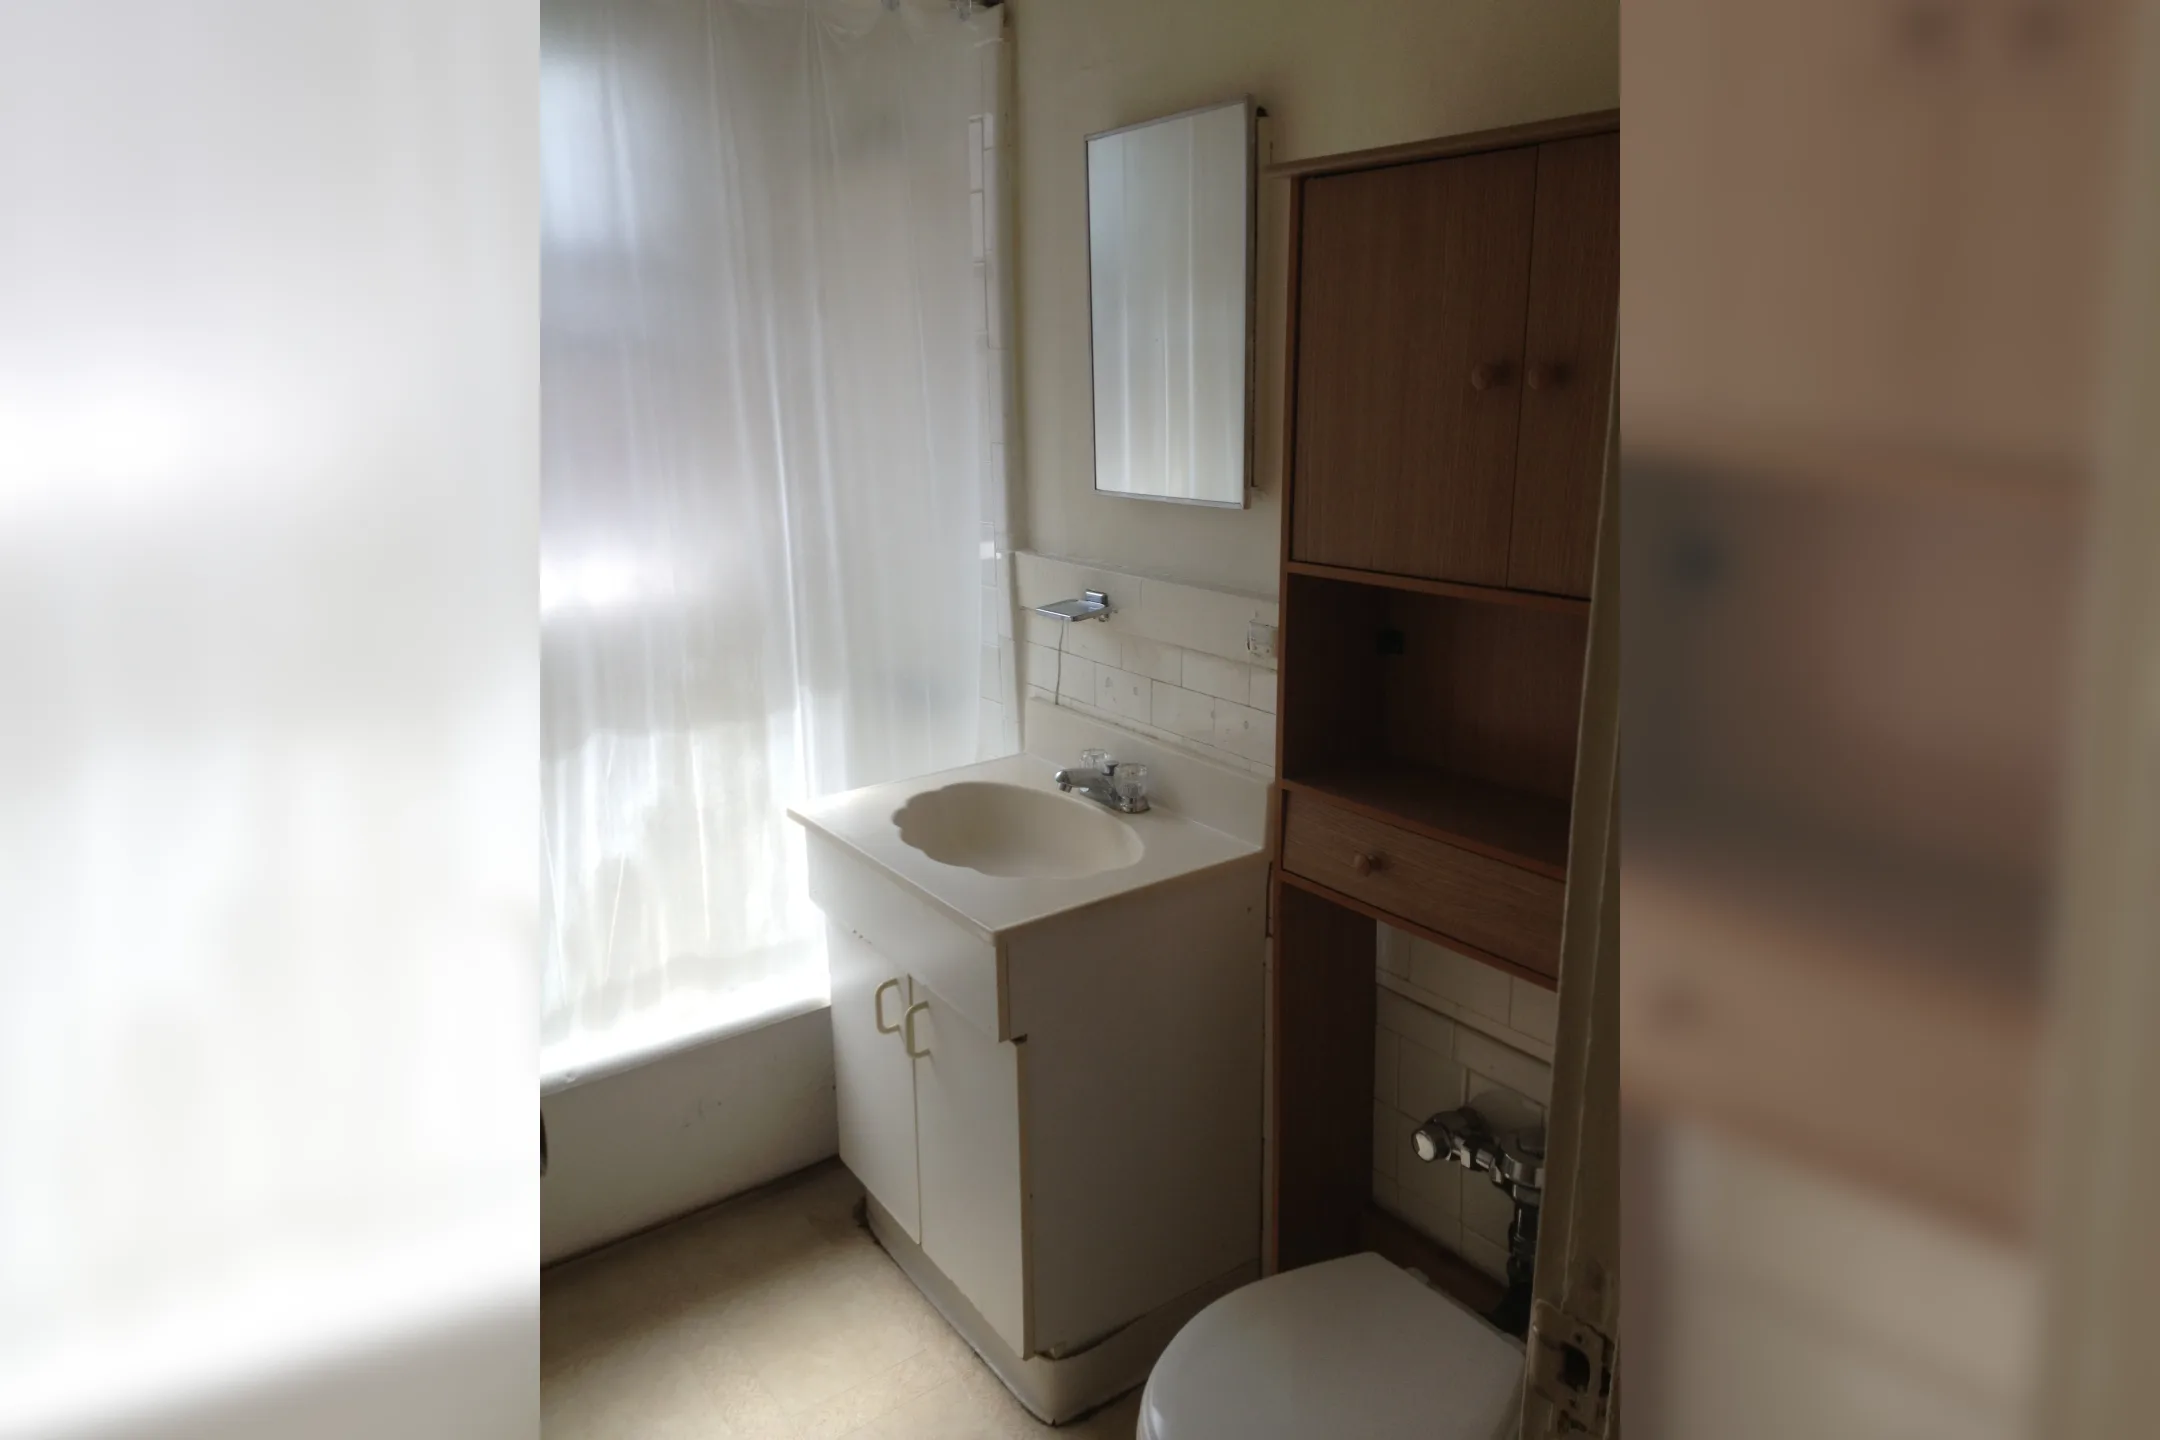 Bathroom - Commonwealth Apartments - Allston, MA